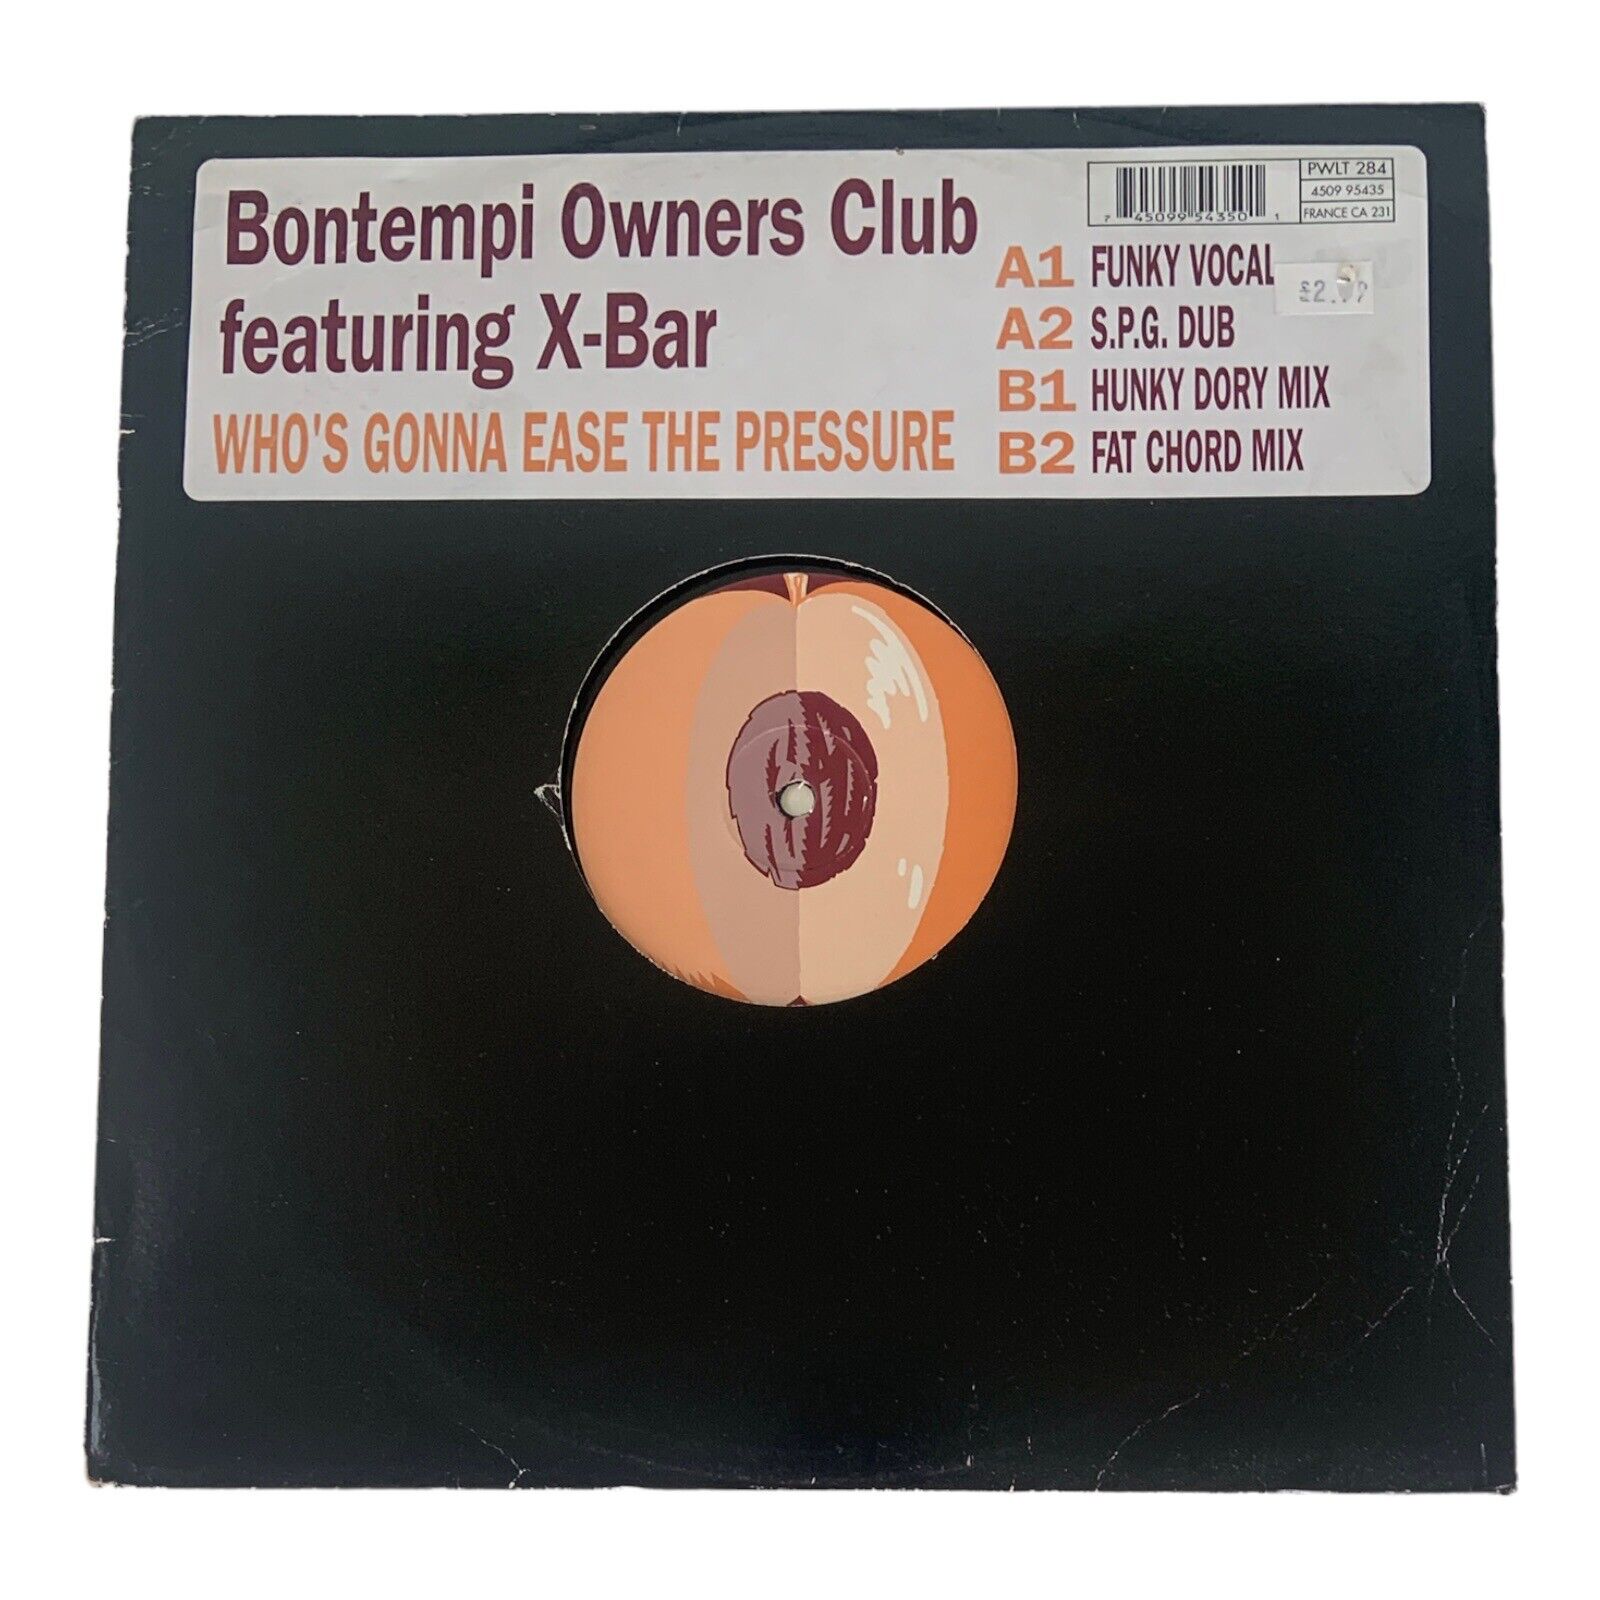 Vintage Bontempi Owners Club ease pressure 33 12” vinyl  Peach records.1994 VG+